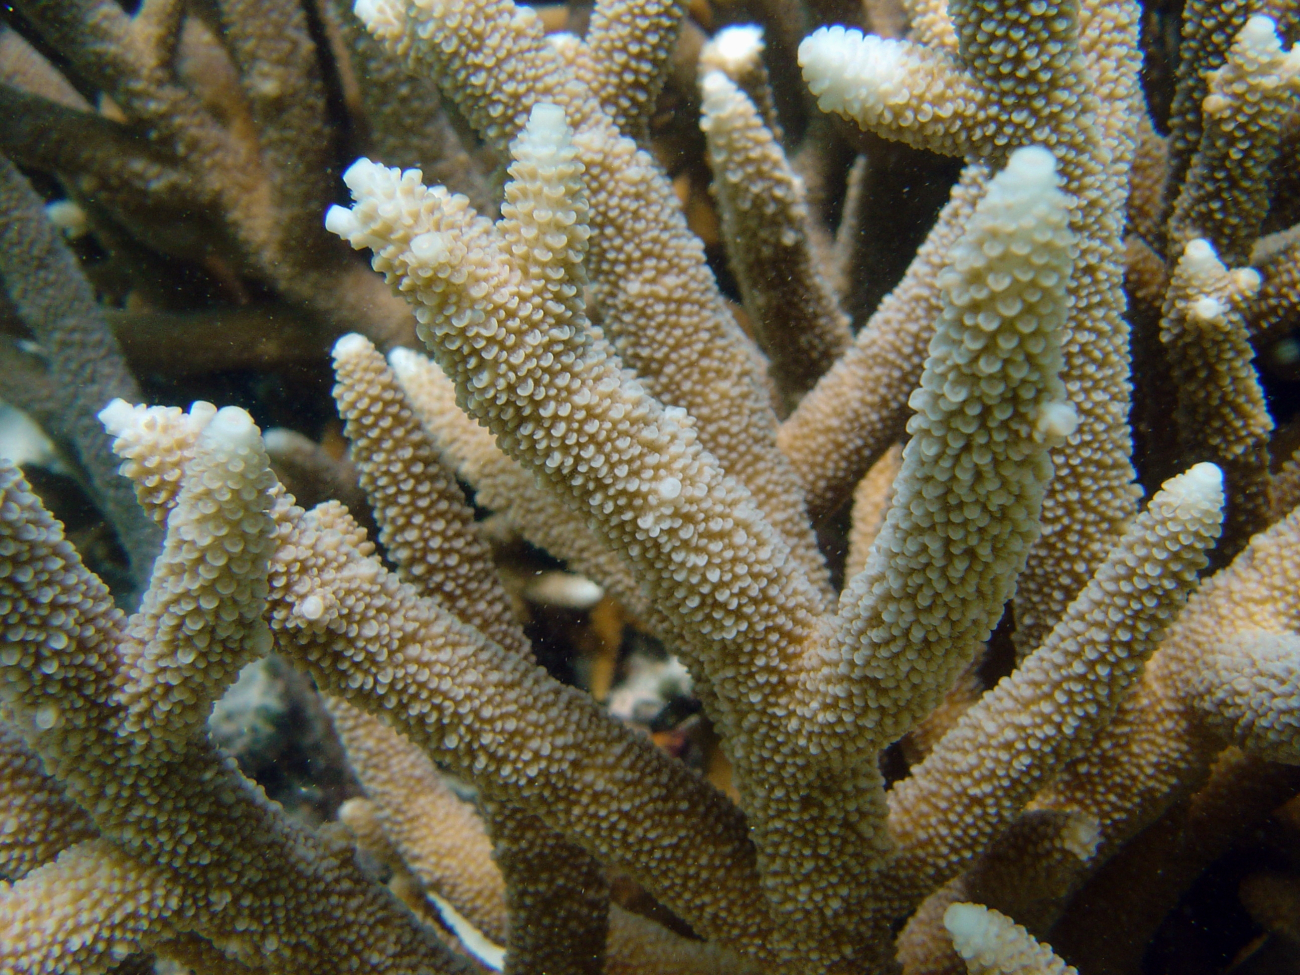 Staghorn coral (Acropora sp